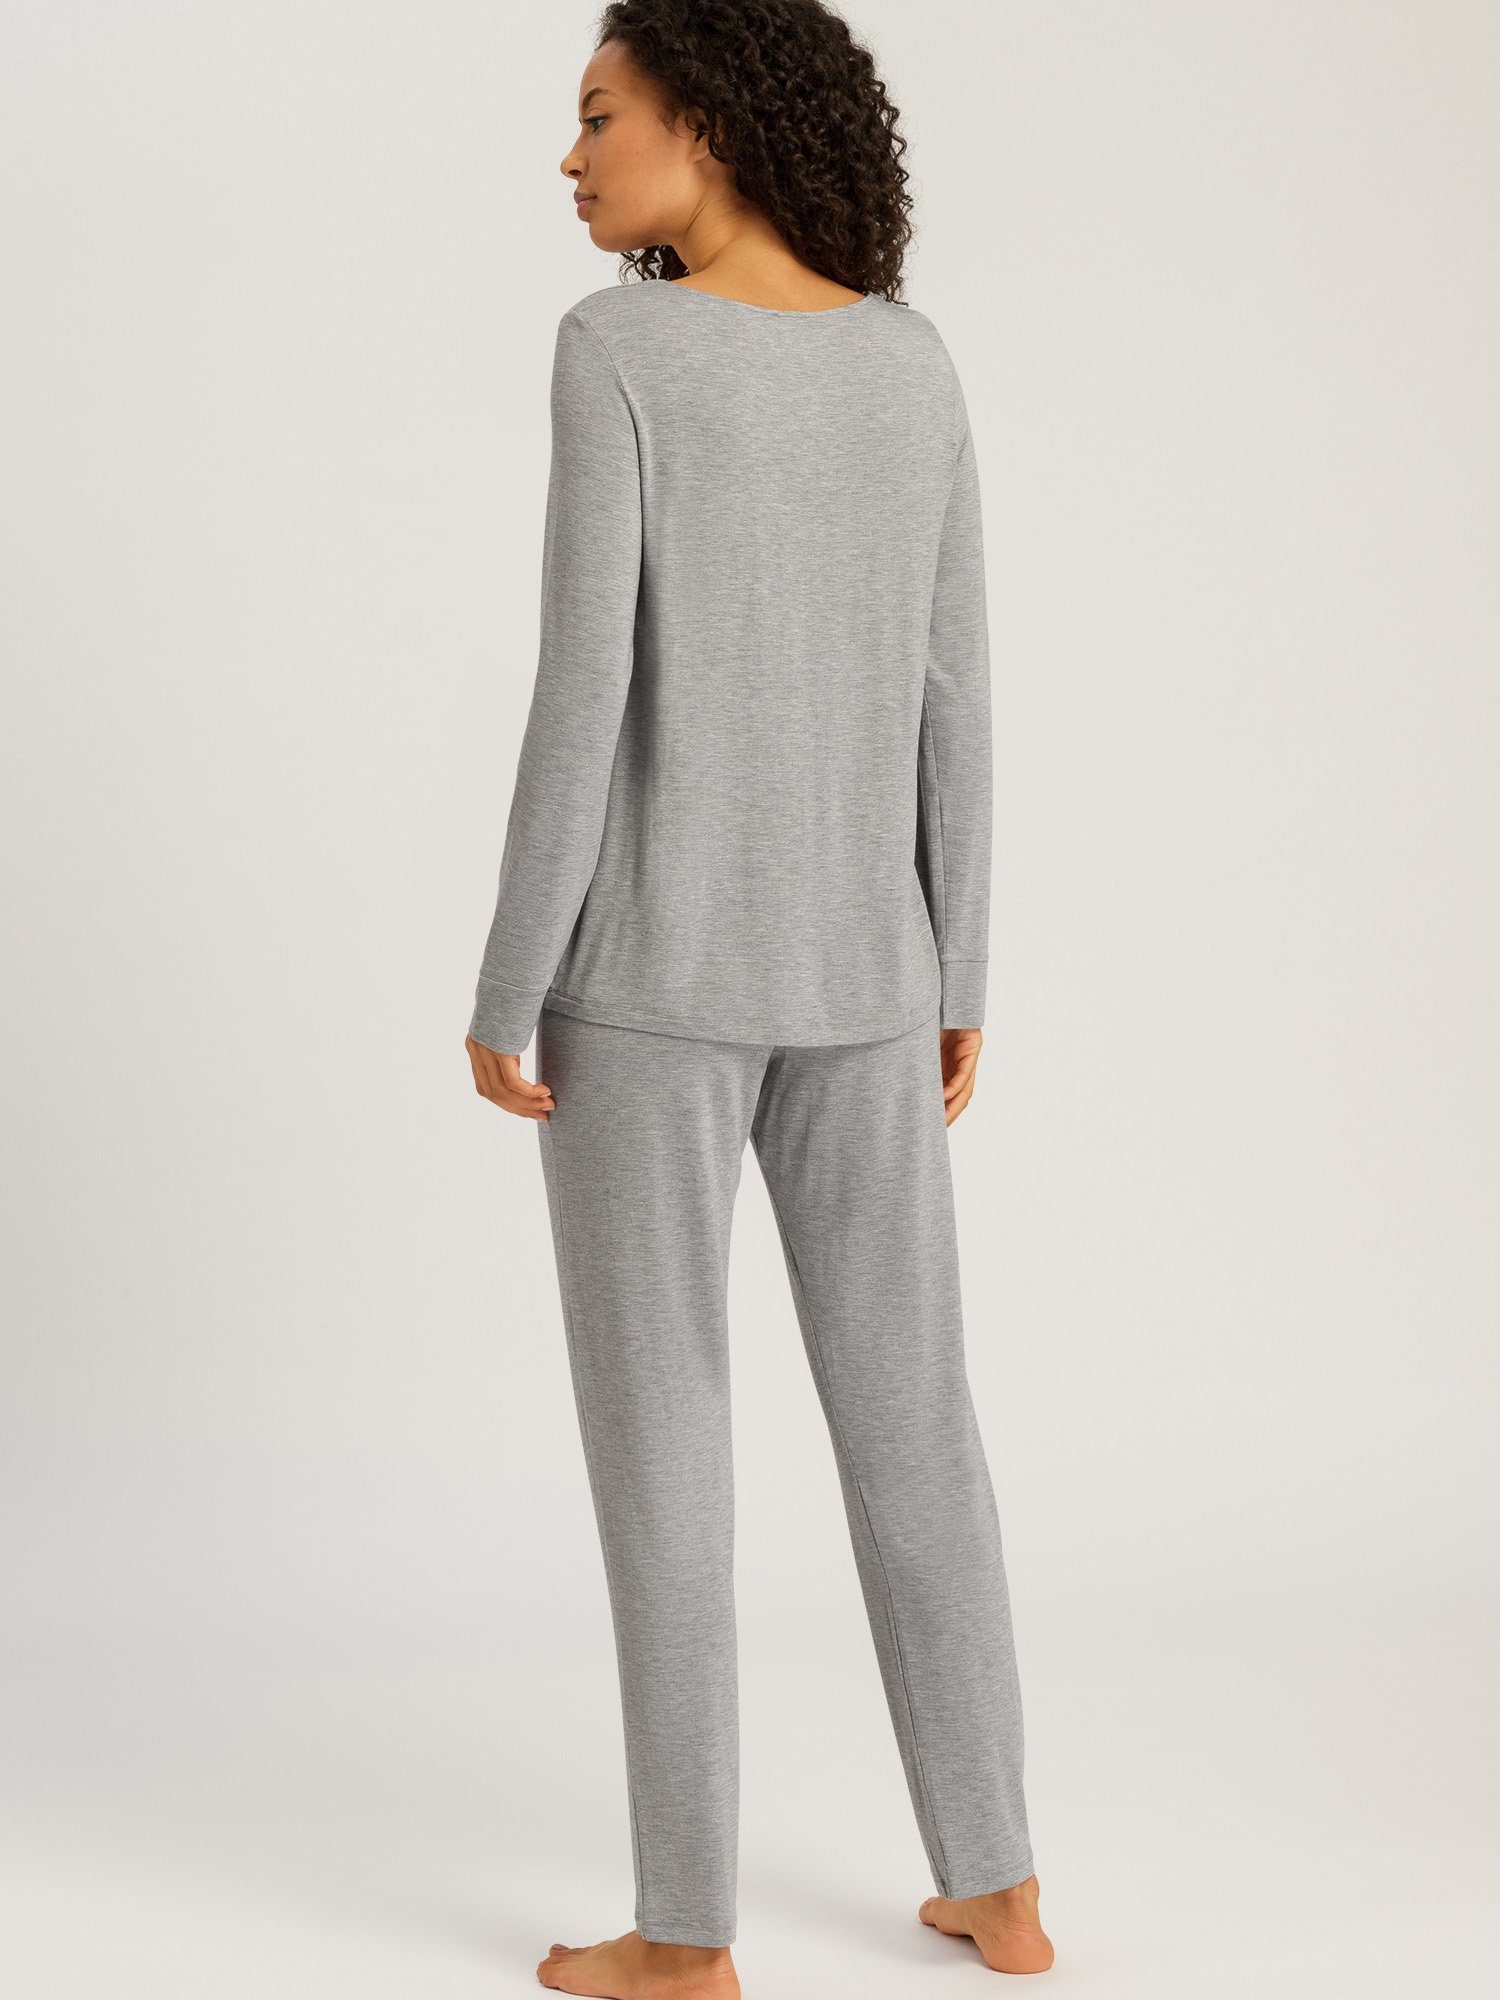 Pyjama Natural Elegance melange Hanro grey